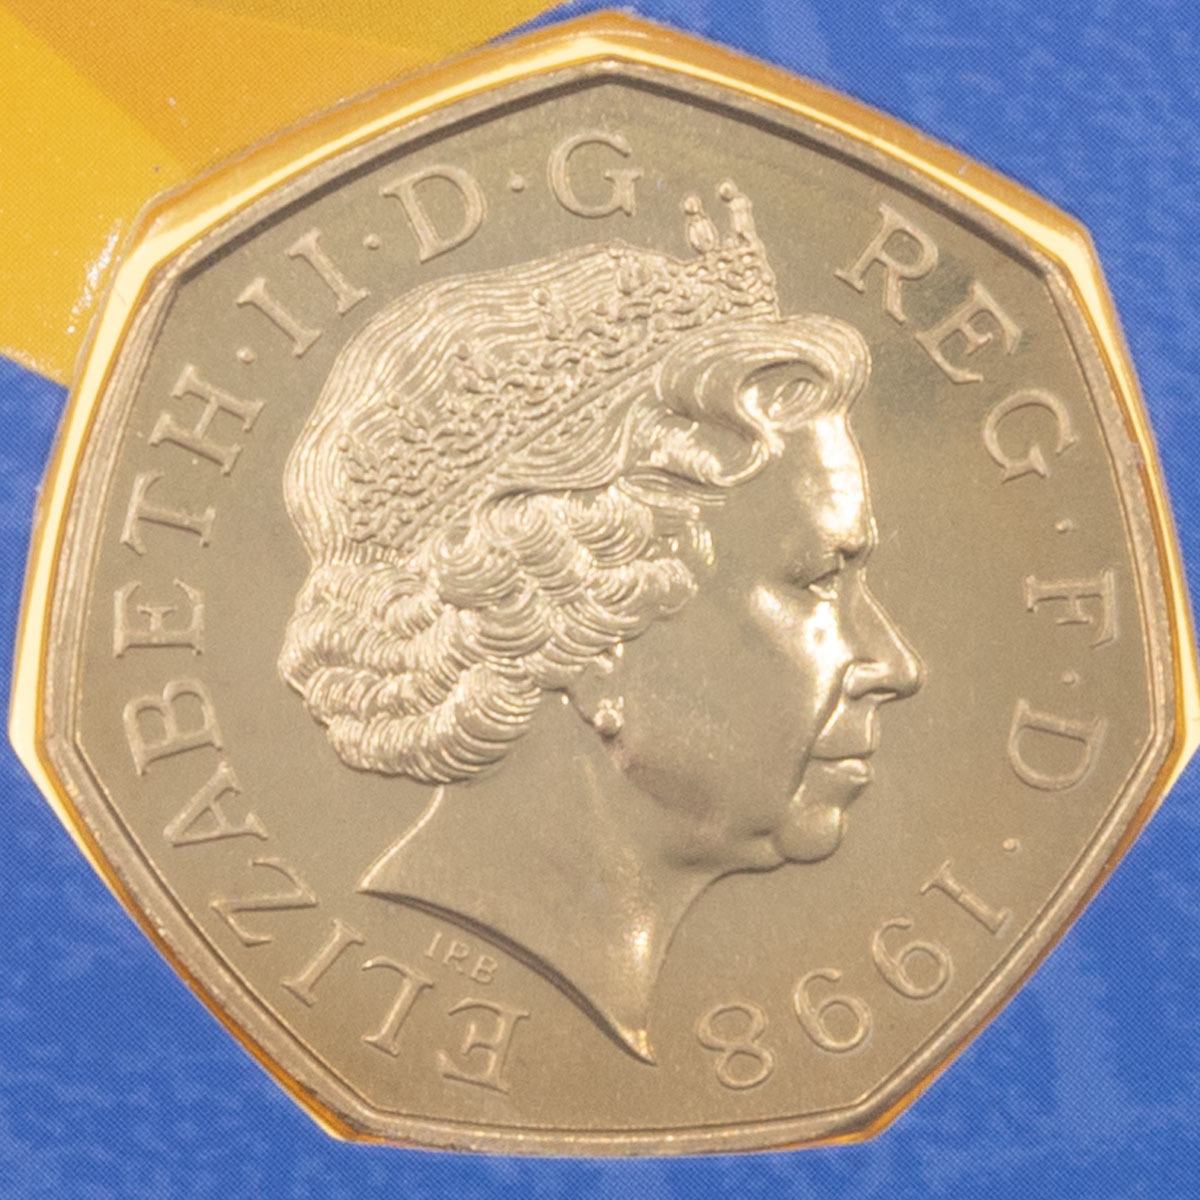 UKEBBU 1998 EEC European Economic Community Stars And Britannia Definitive 2 Coin Fifty Pence Brilliant Uncirculated Set In Folder Obverse Defintive